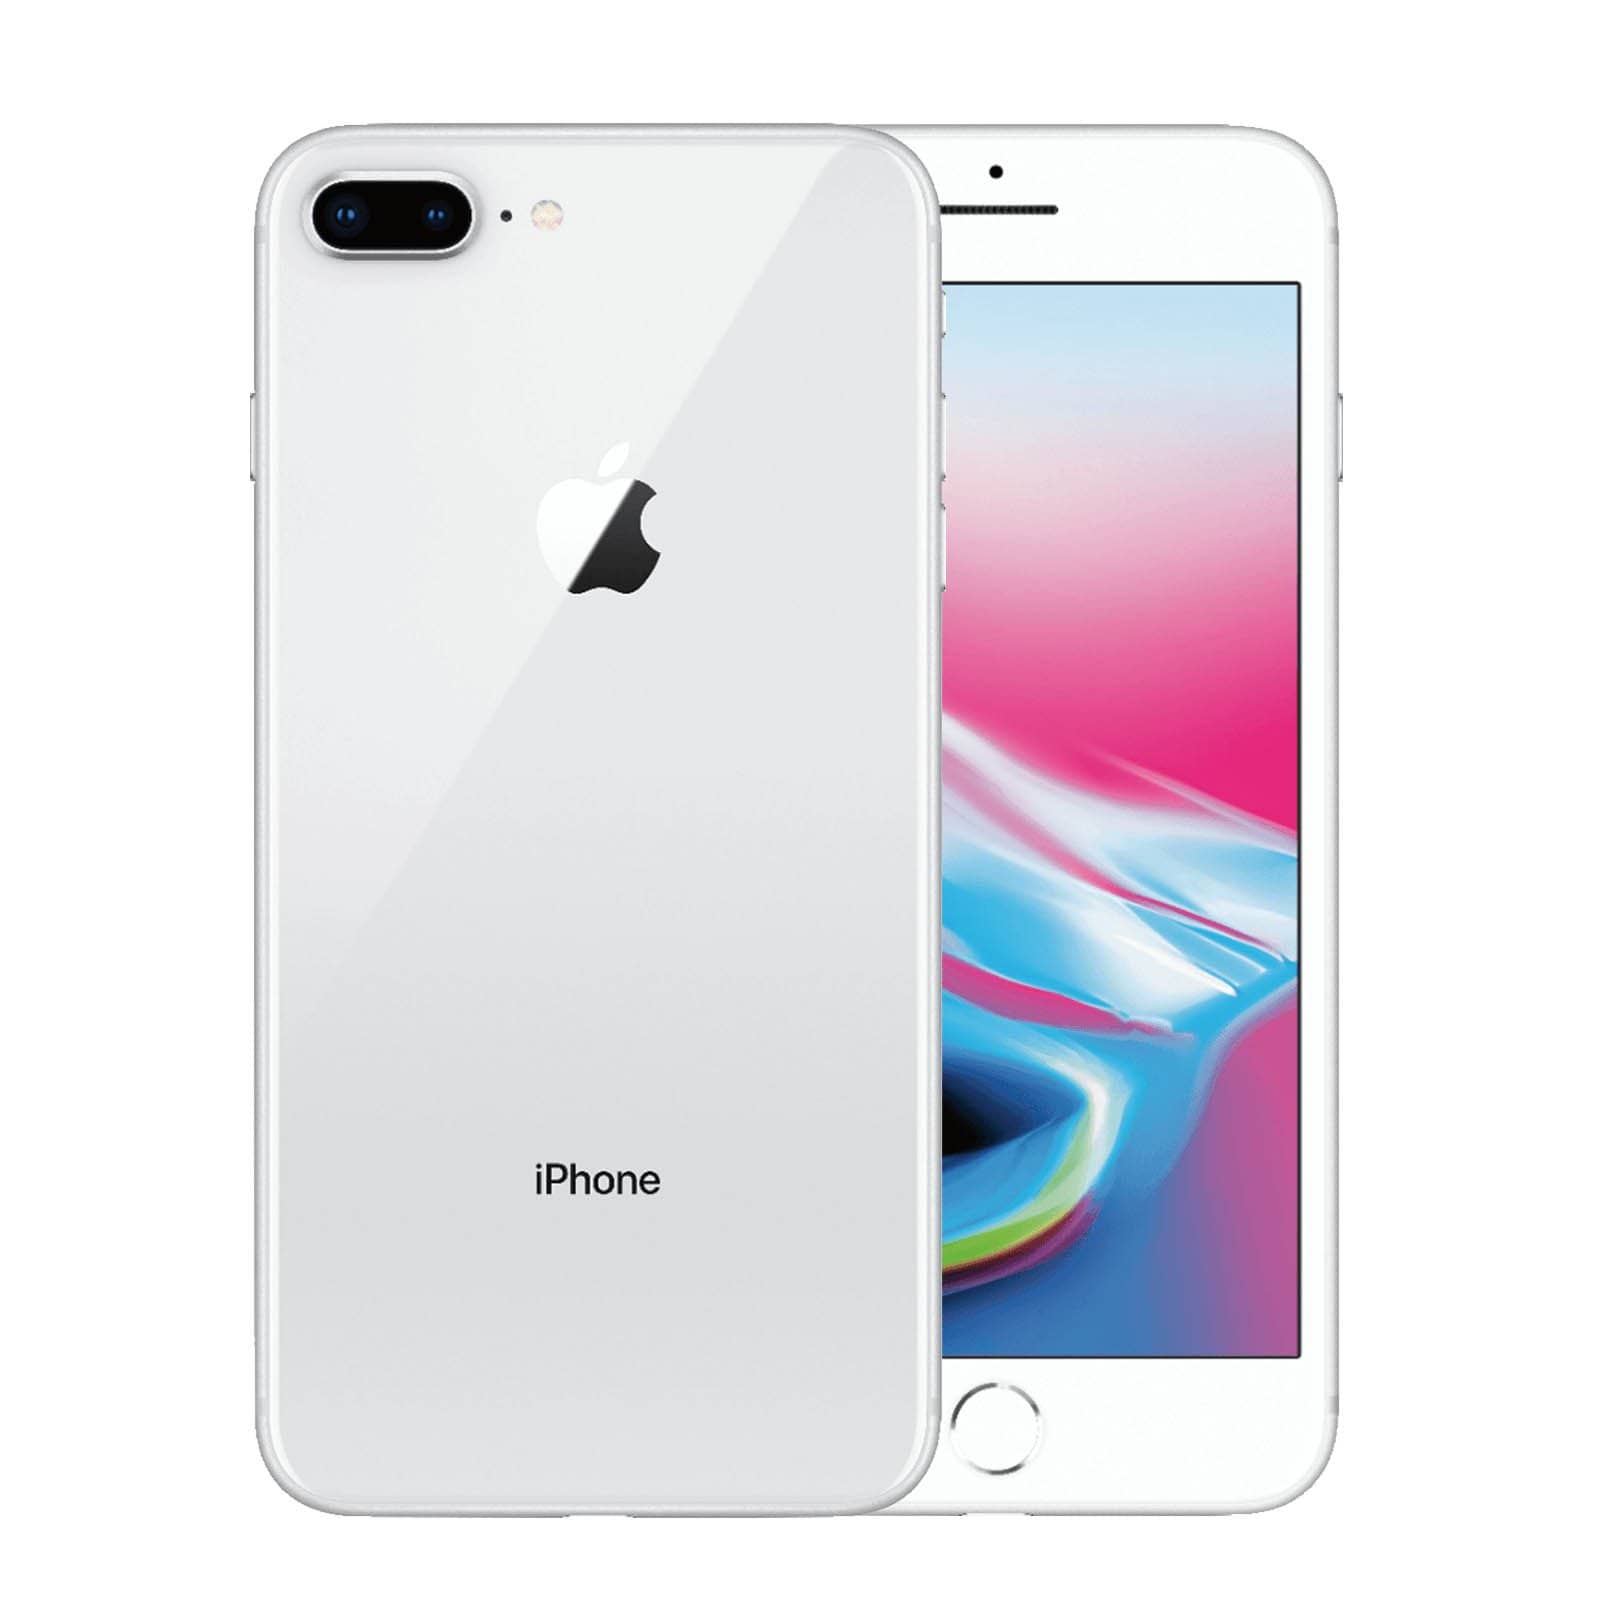 Apple iPhone 8 Plus 256GB Silver Very Good - Unlocked 256GB Silver Very Good